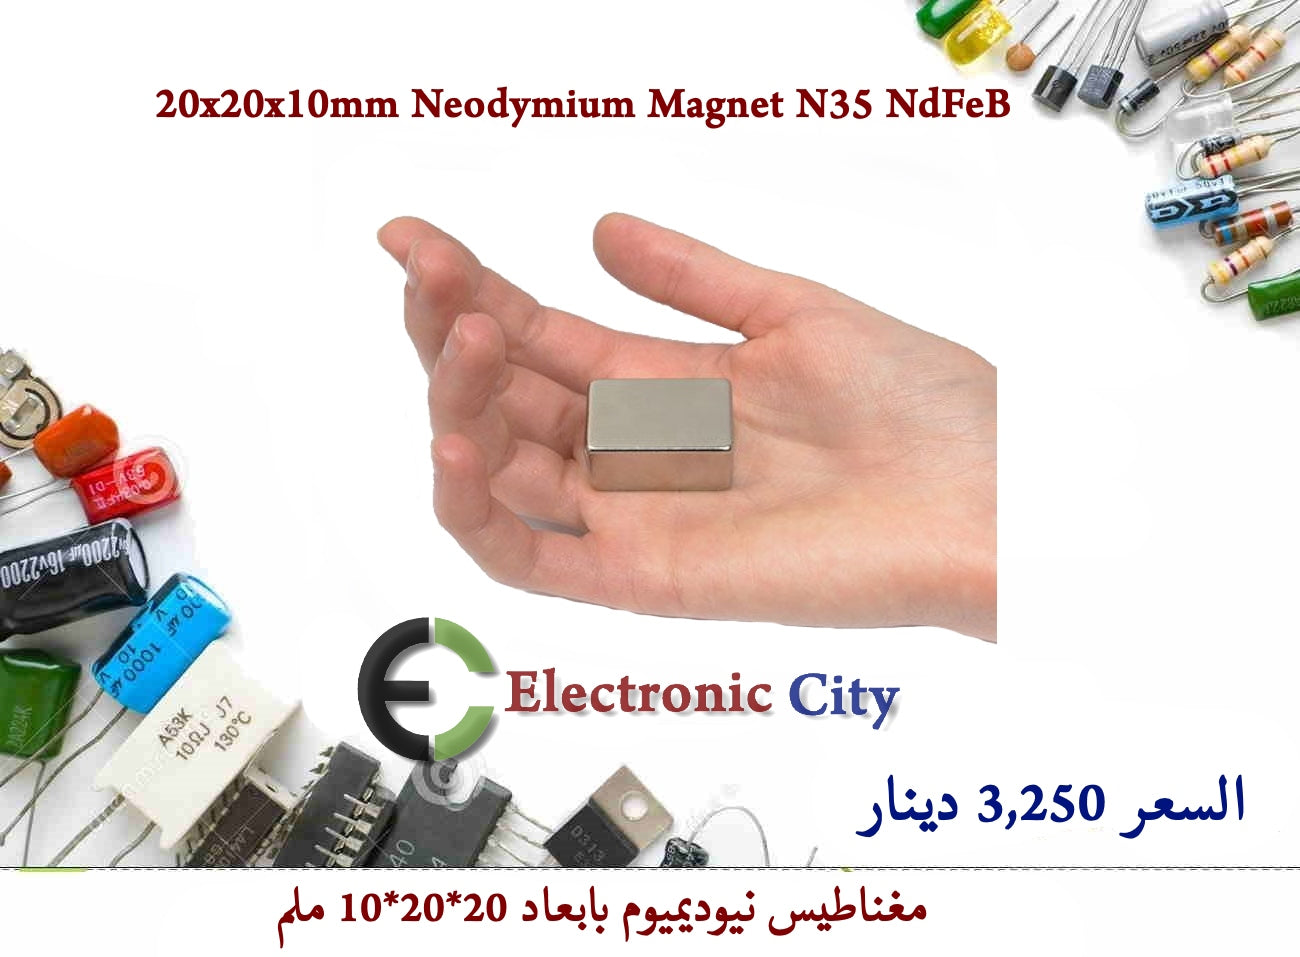 20x20x10mm Neodymium Magnet N35 NdFeB